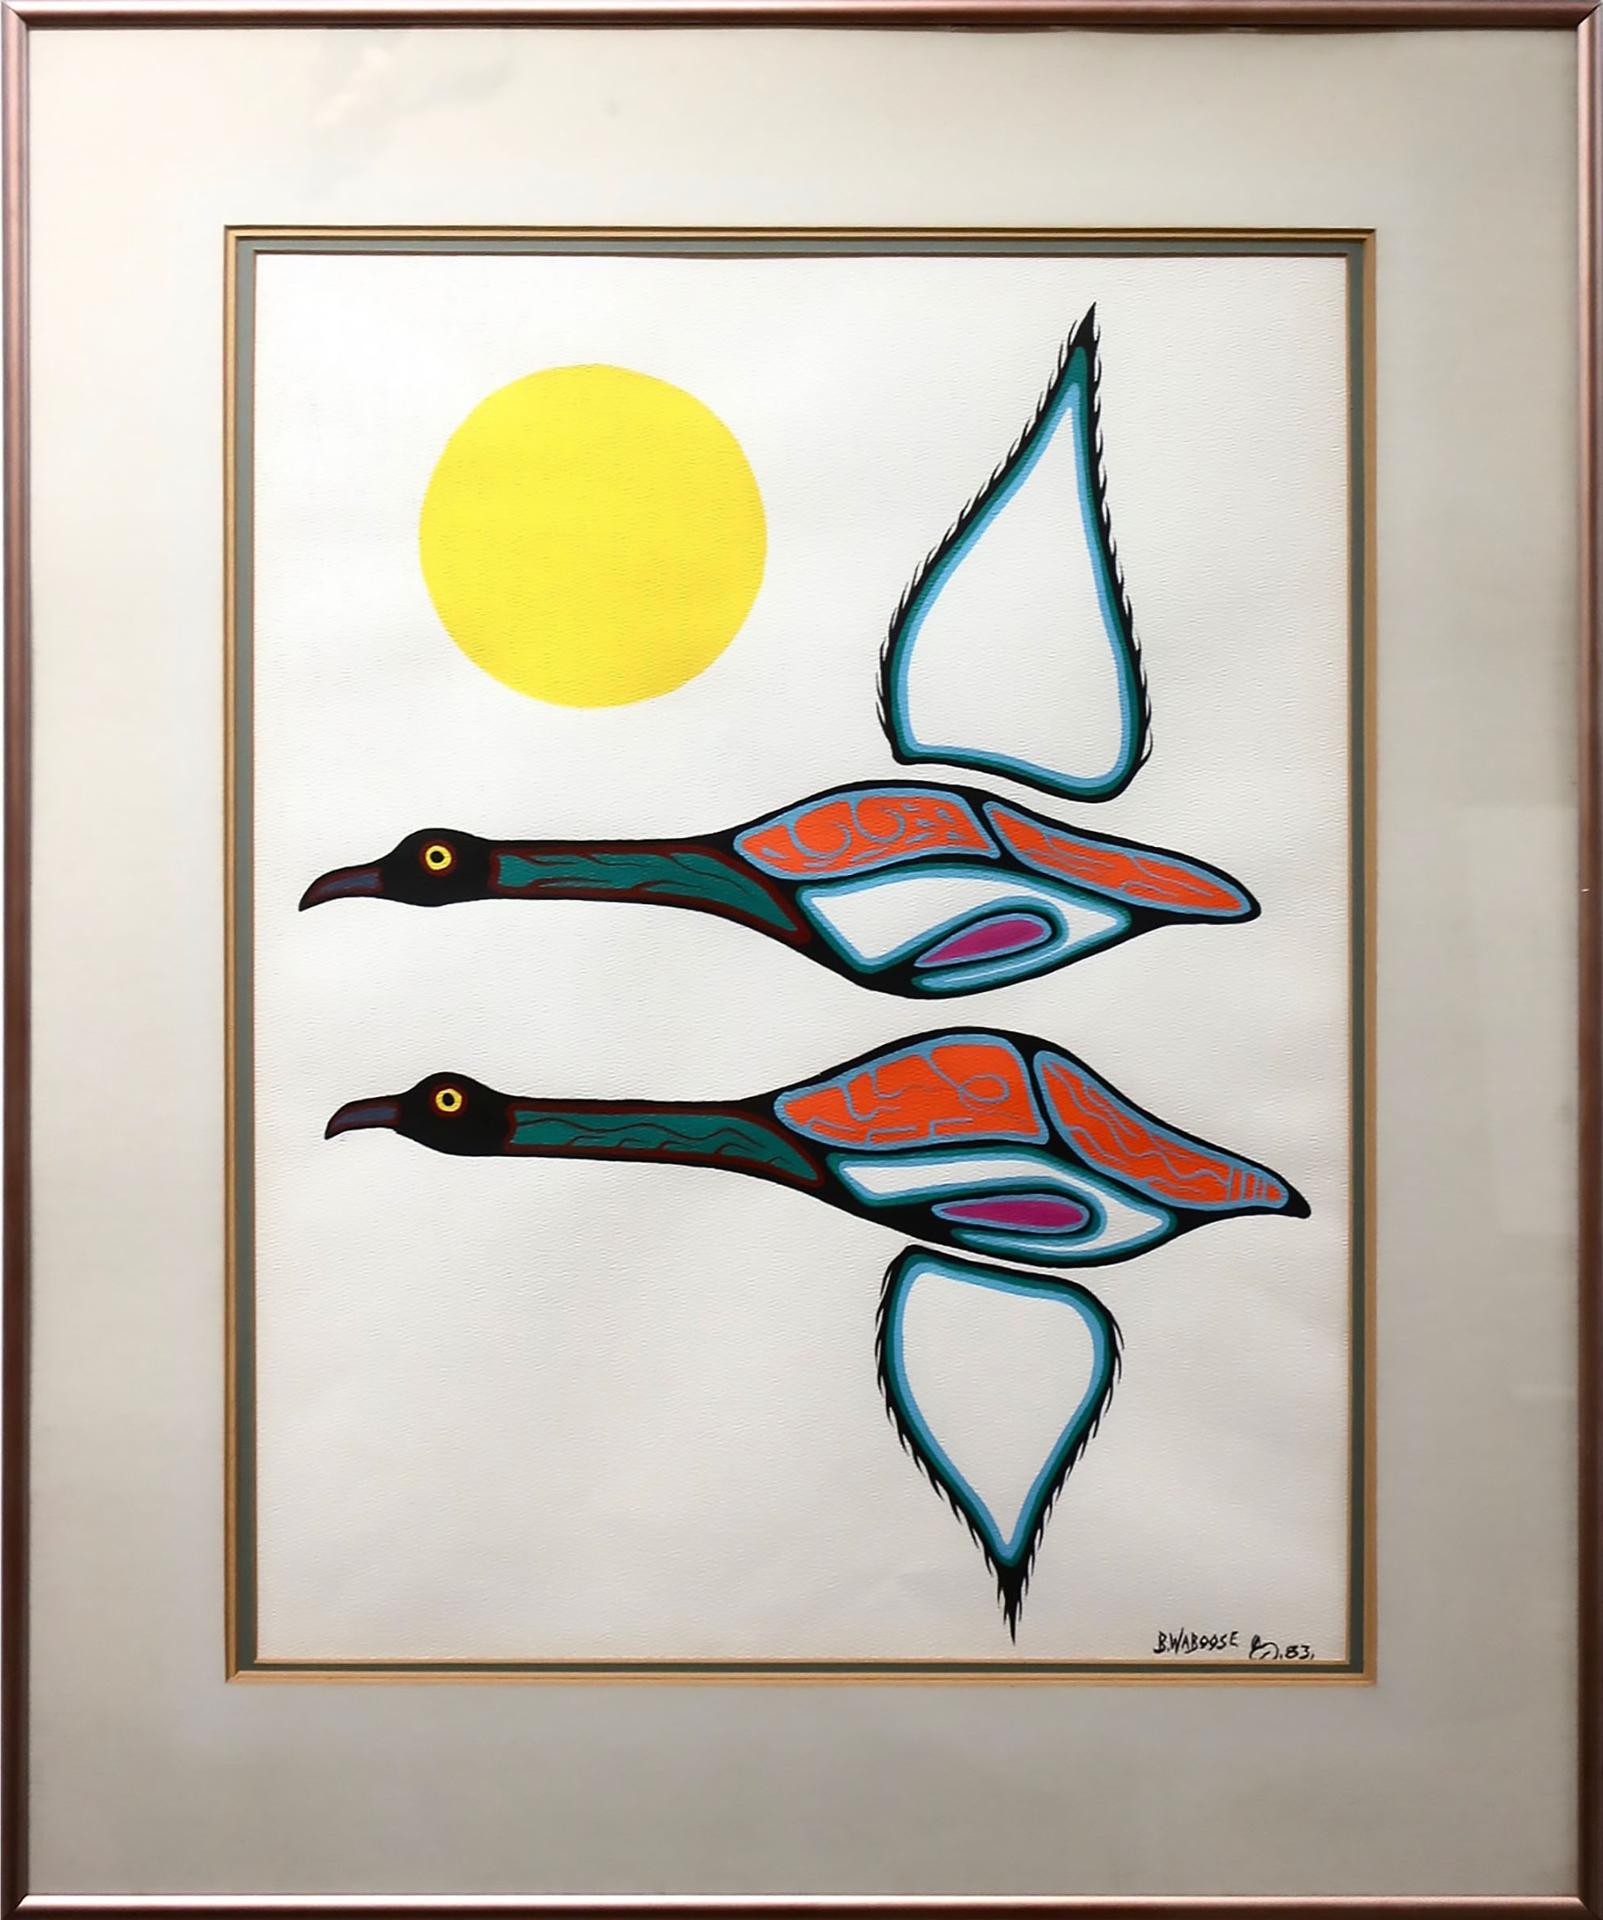 Brian J. Waboose (1955) - Two Birds